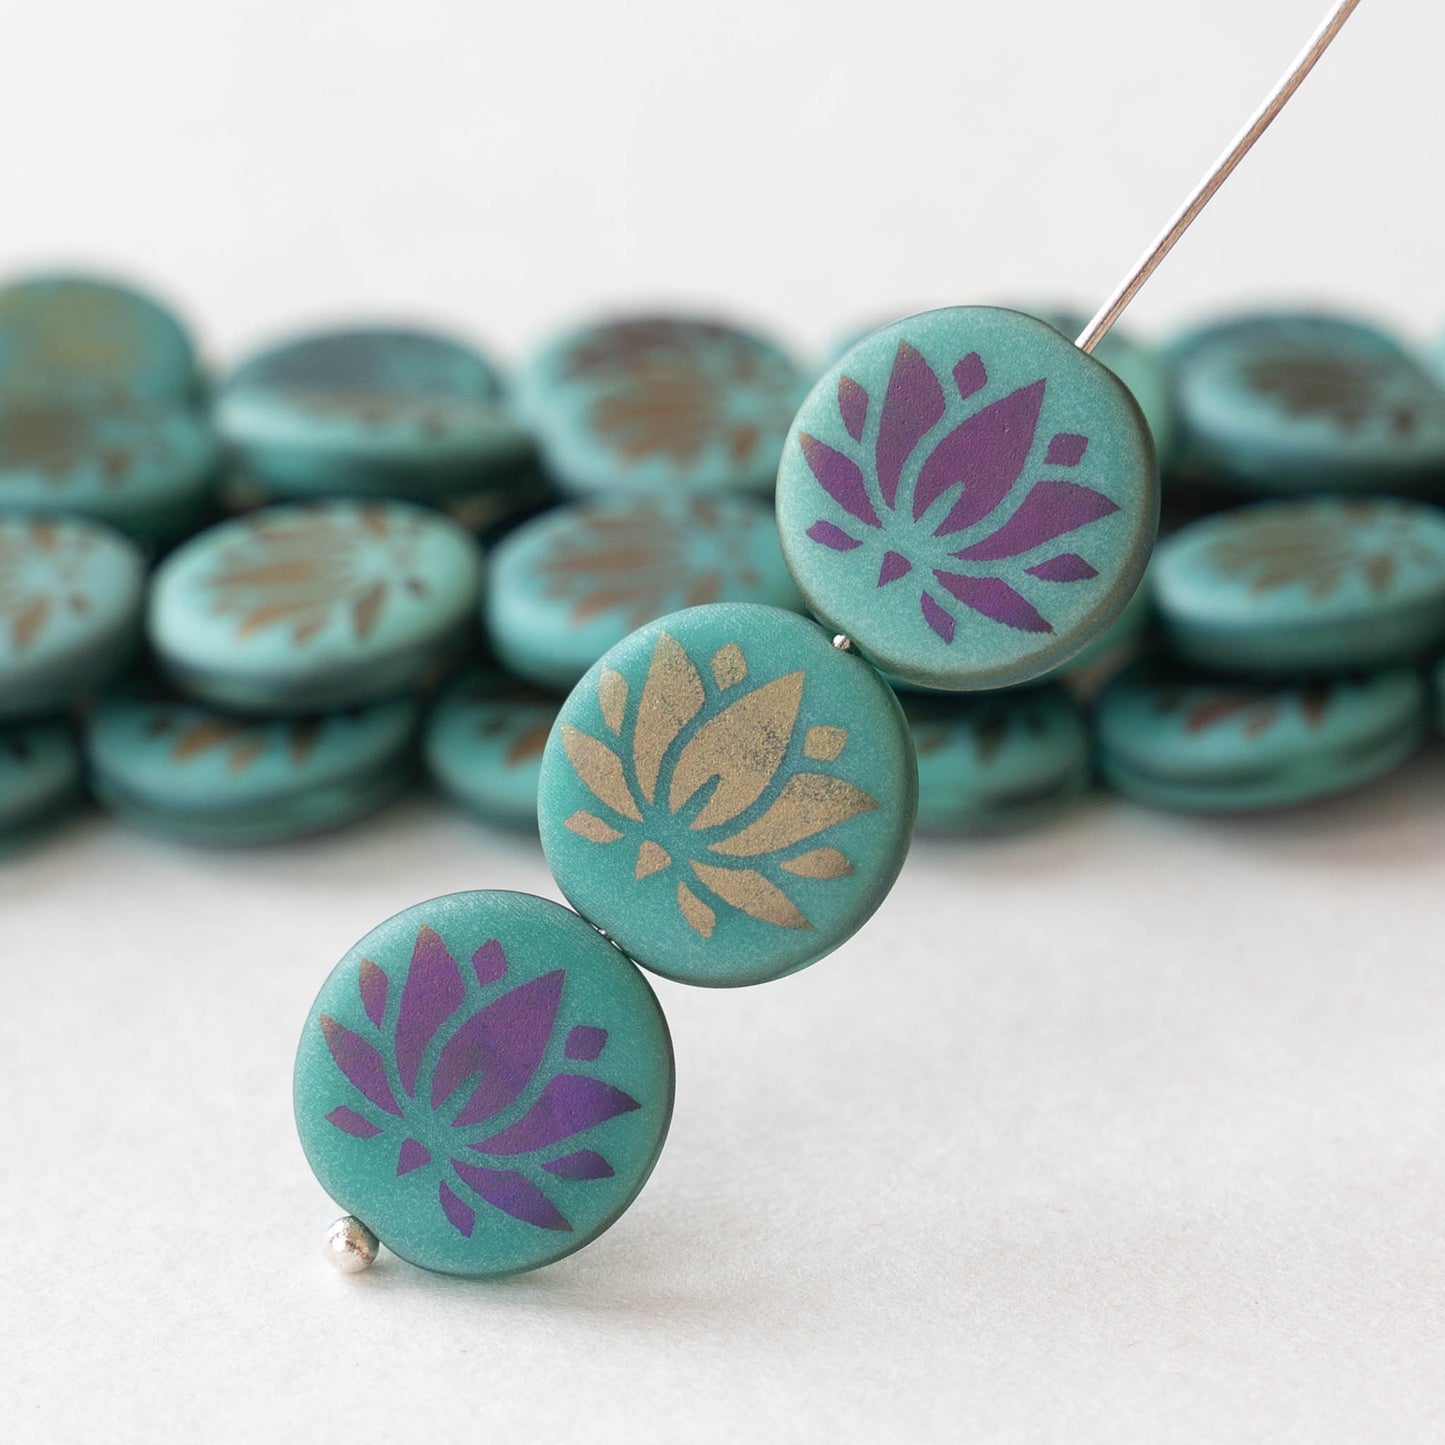 14mm Lotus Flower Coin Beads - Seafoam/Blue - 8 beads